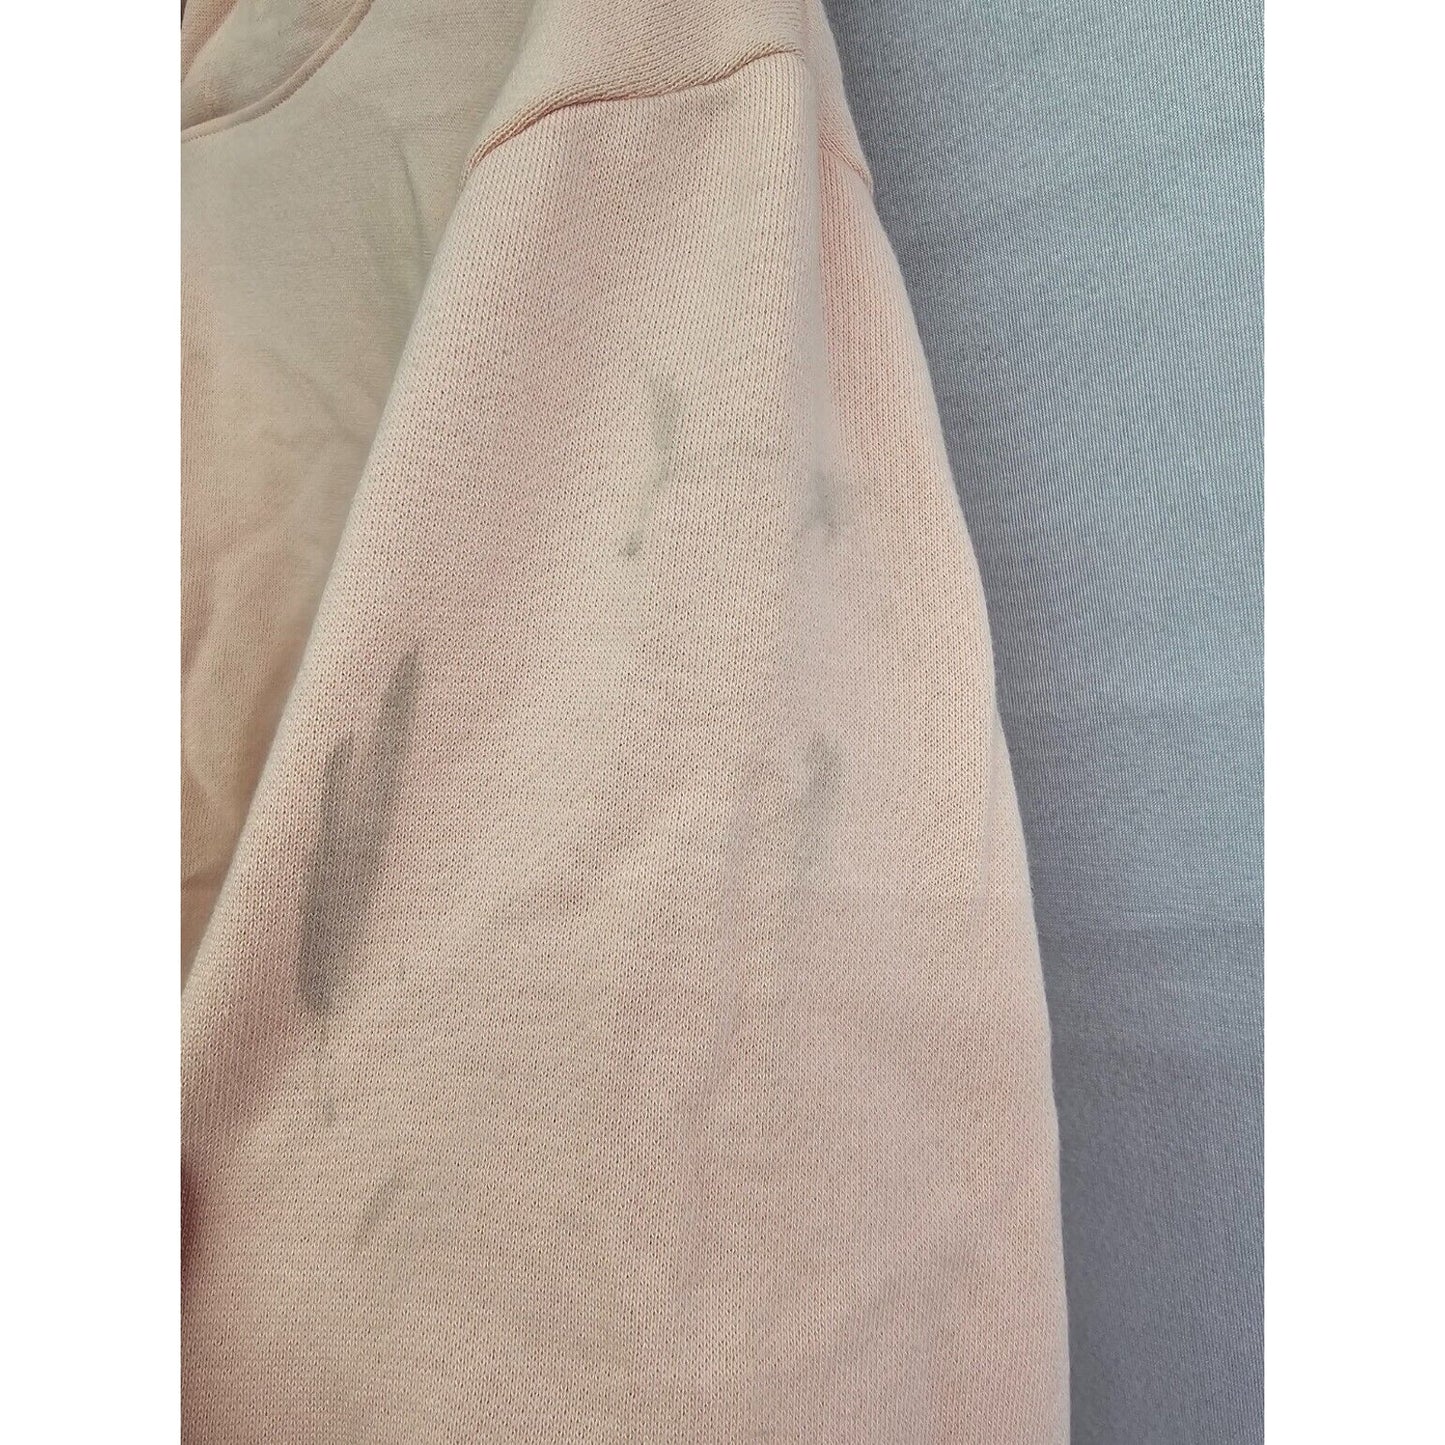 NWT Ingrid & Isabel Women's Nursing Hooded Sweatshirt Peach Size XL